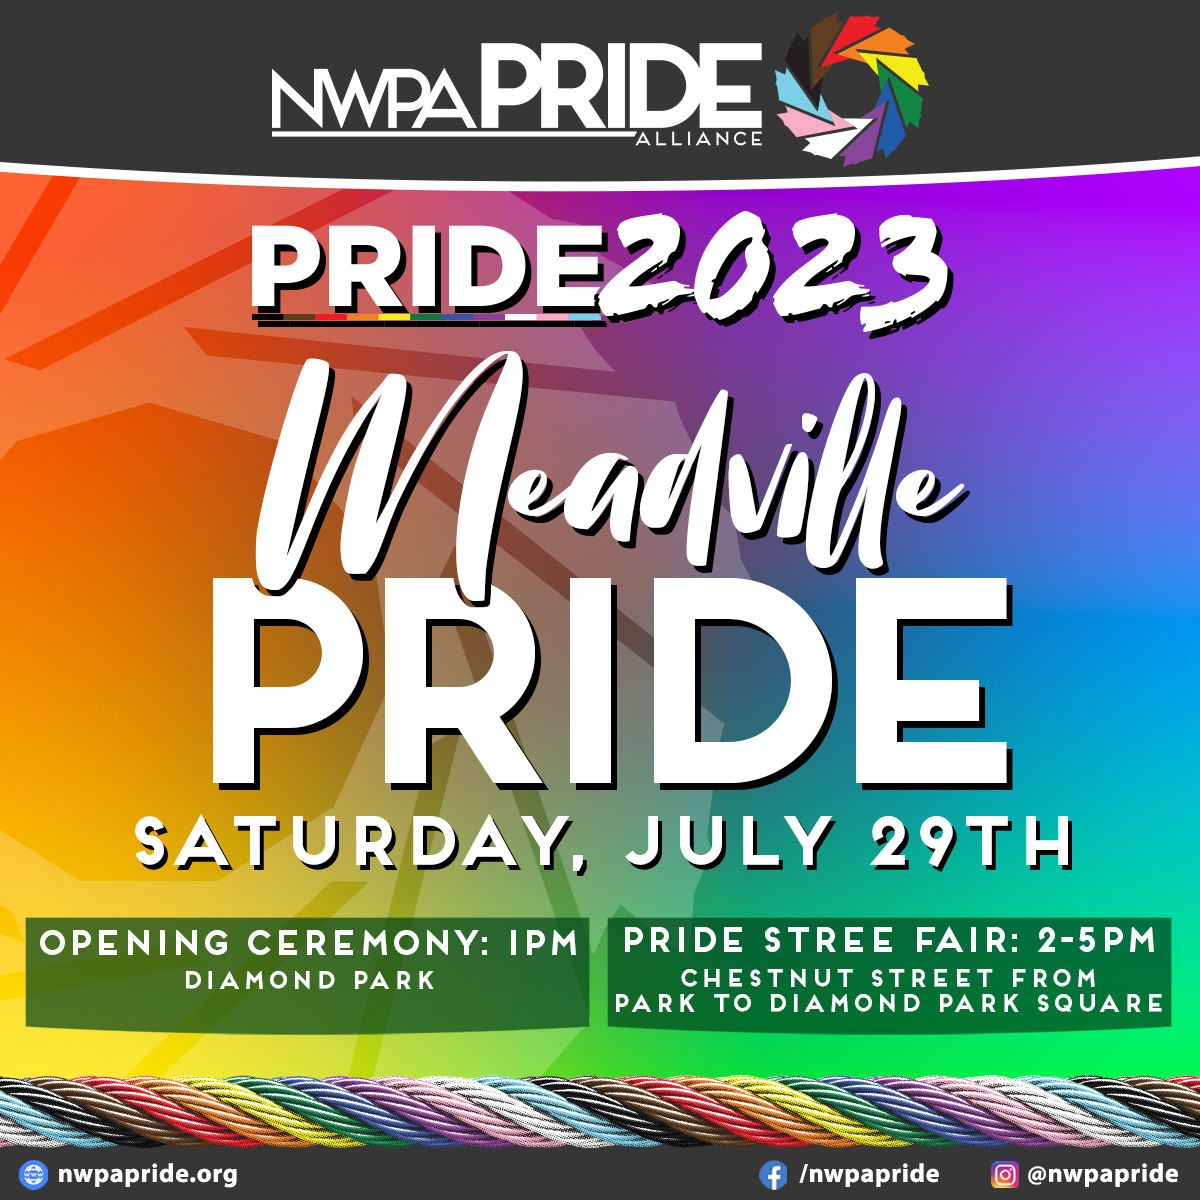 Meadville Pride 2023 Announcement NWPA Pride Alliance